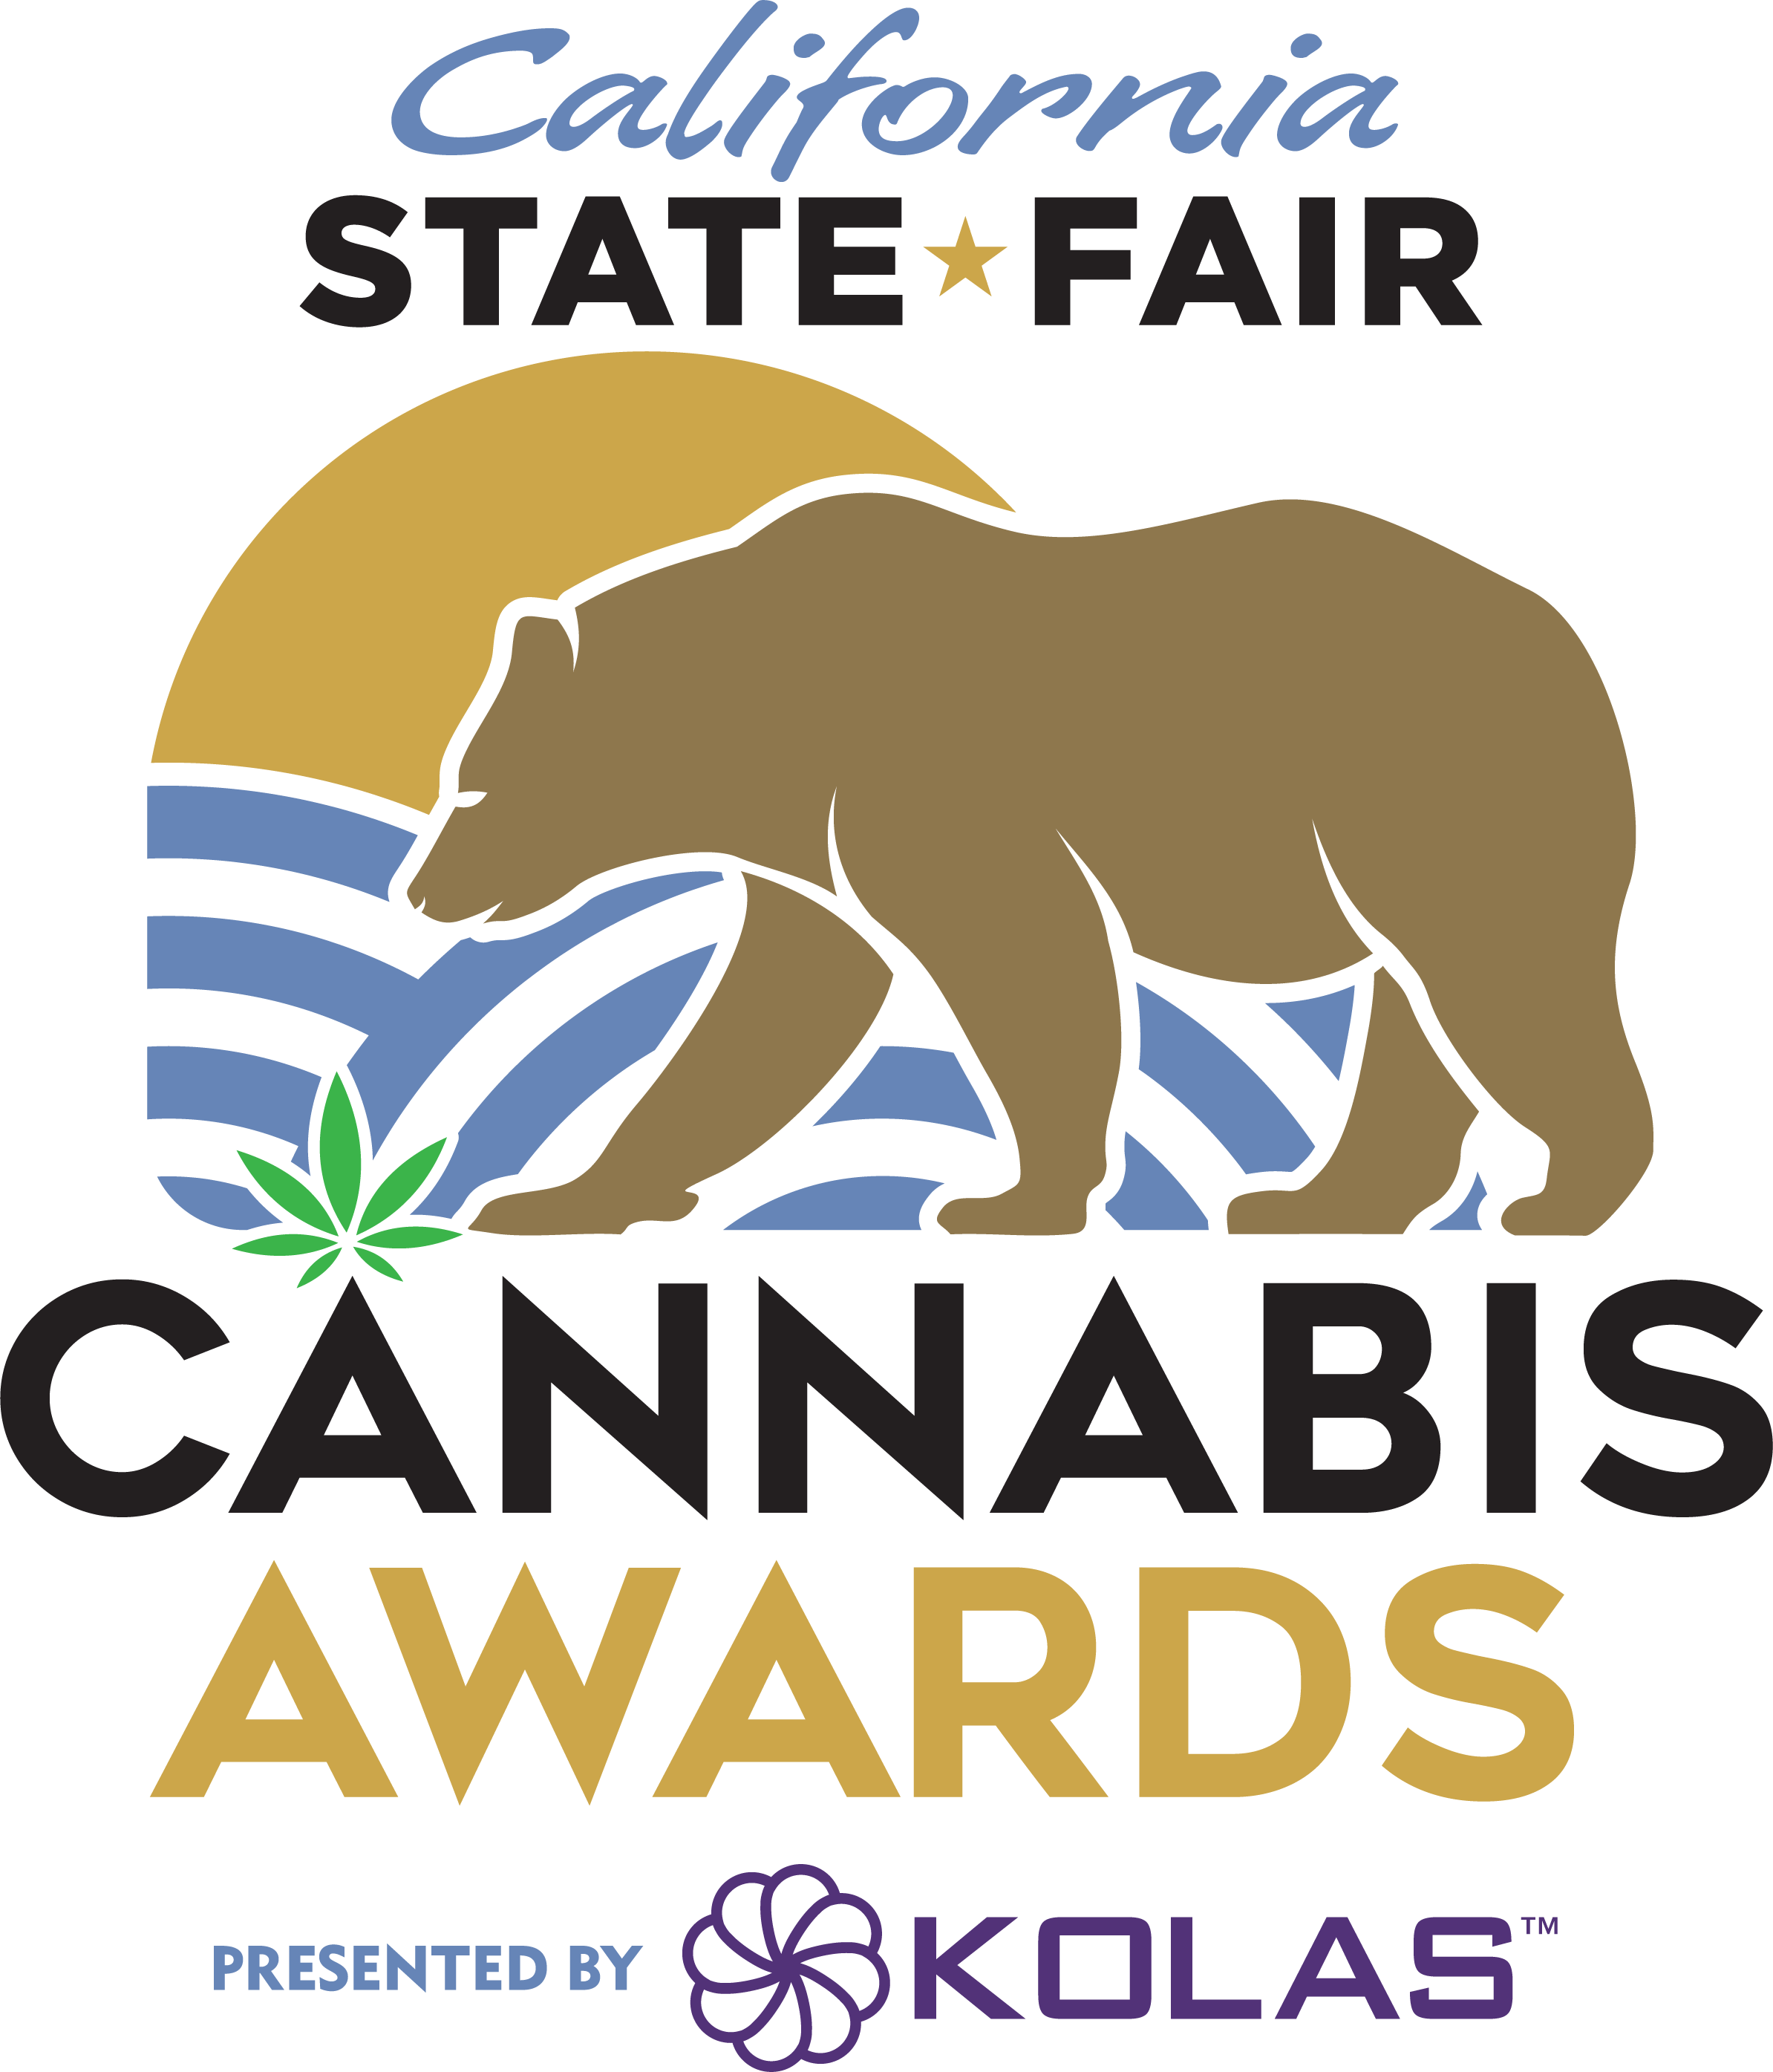 California cannabis Awards presented by Kolas